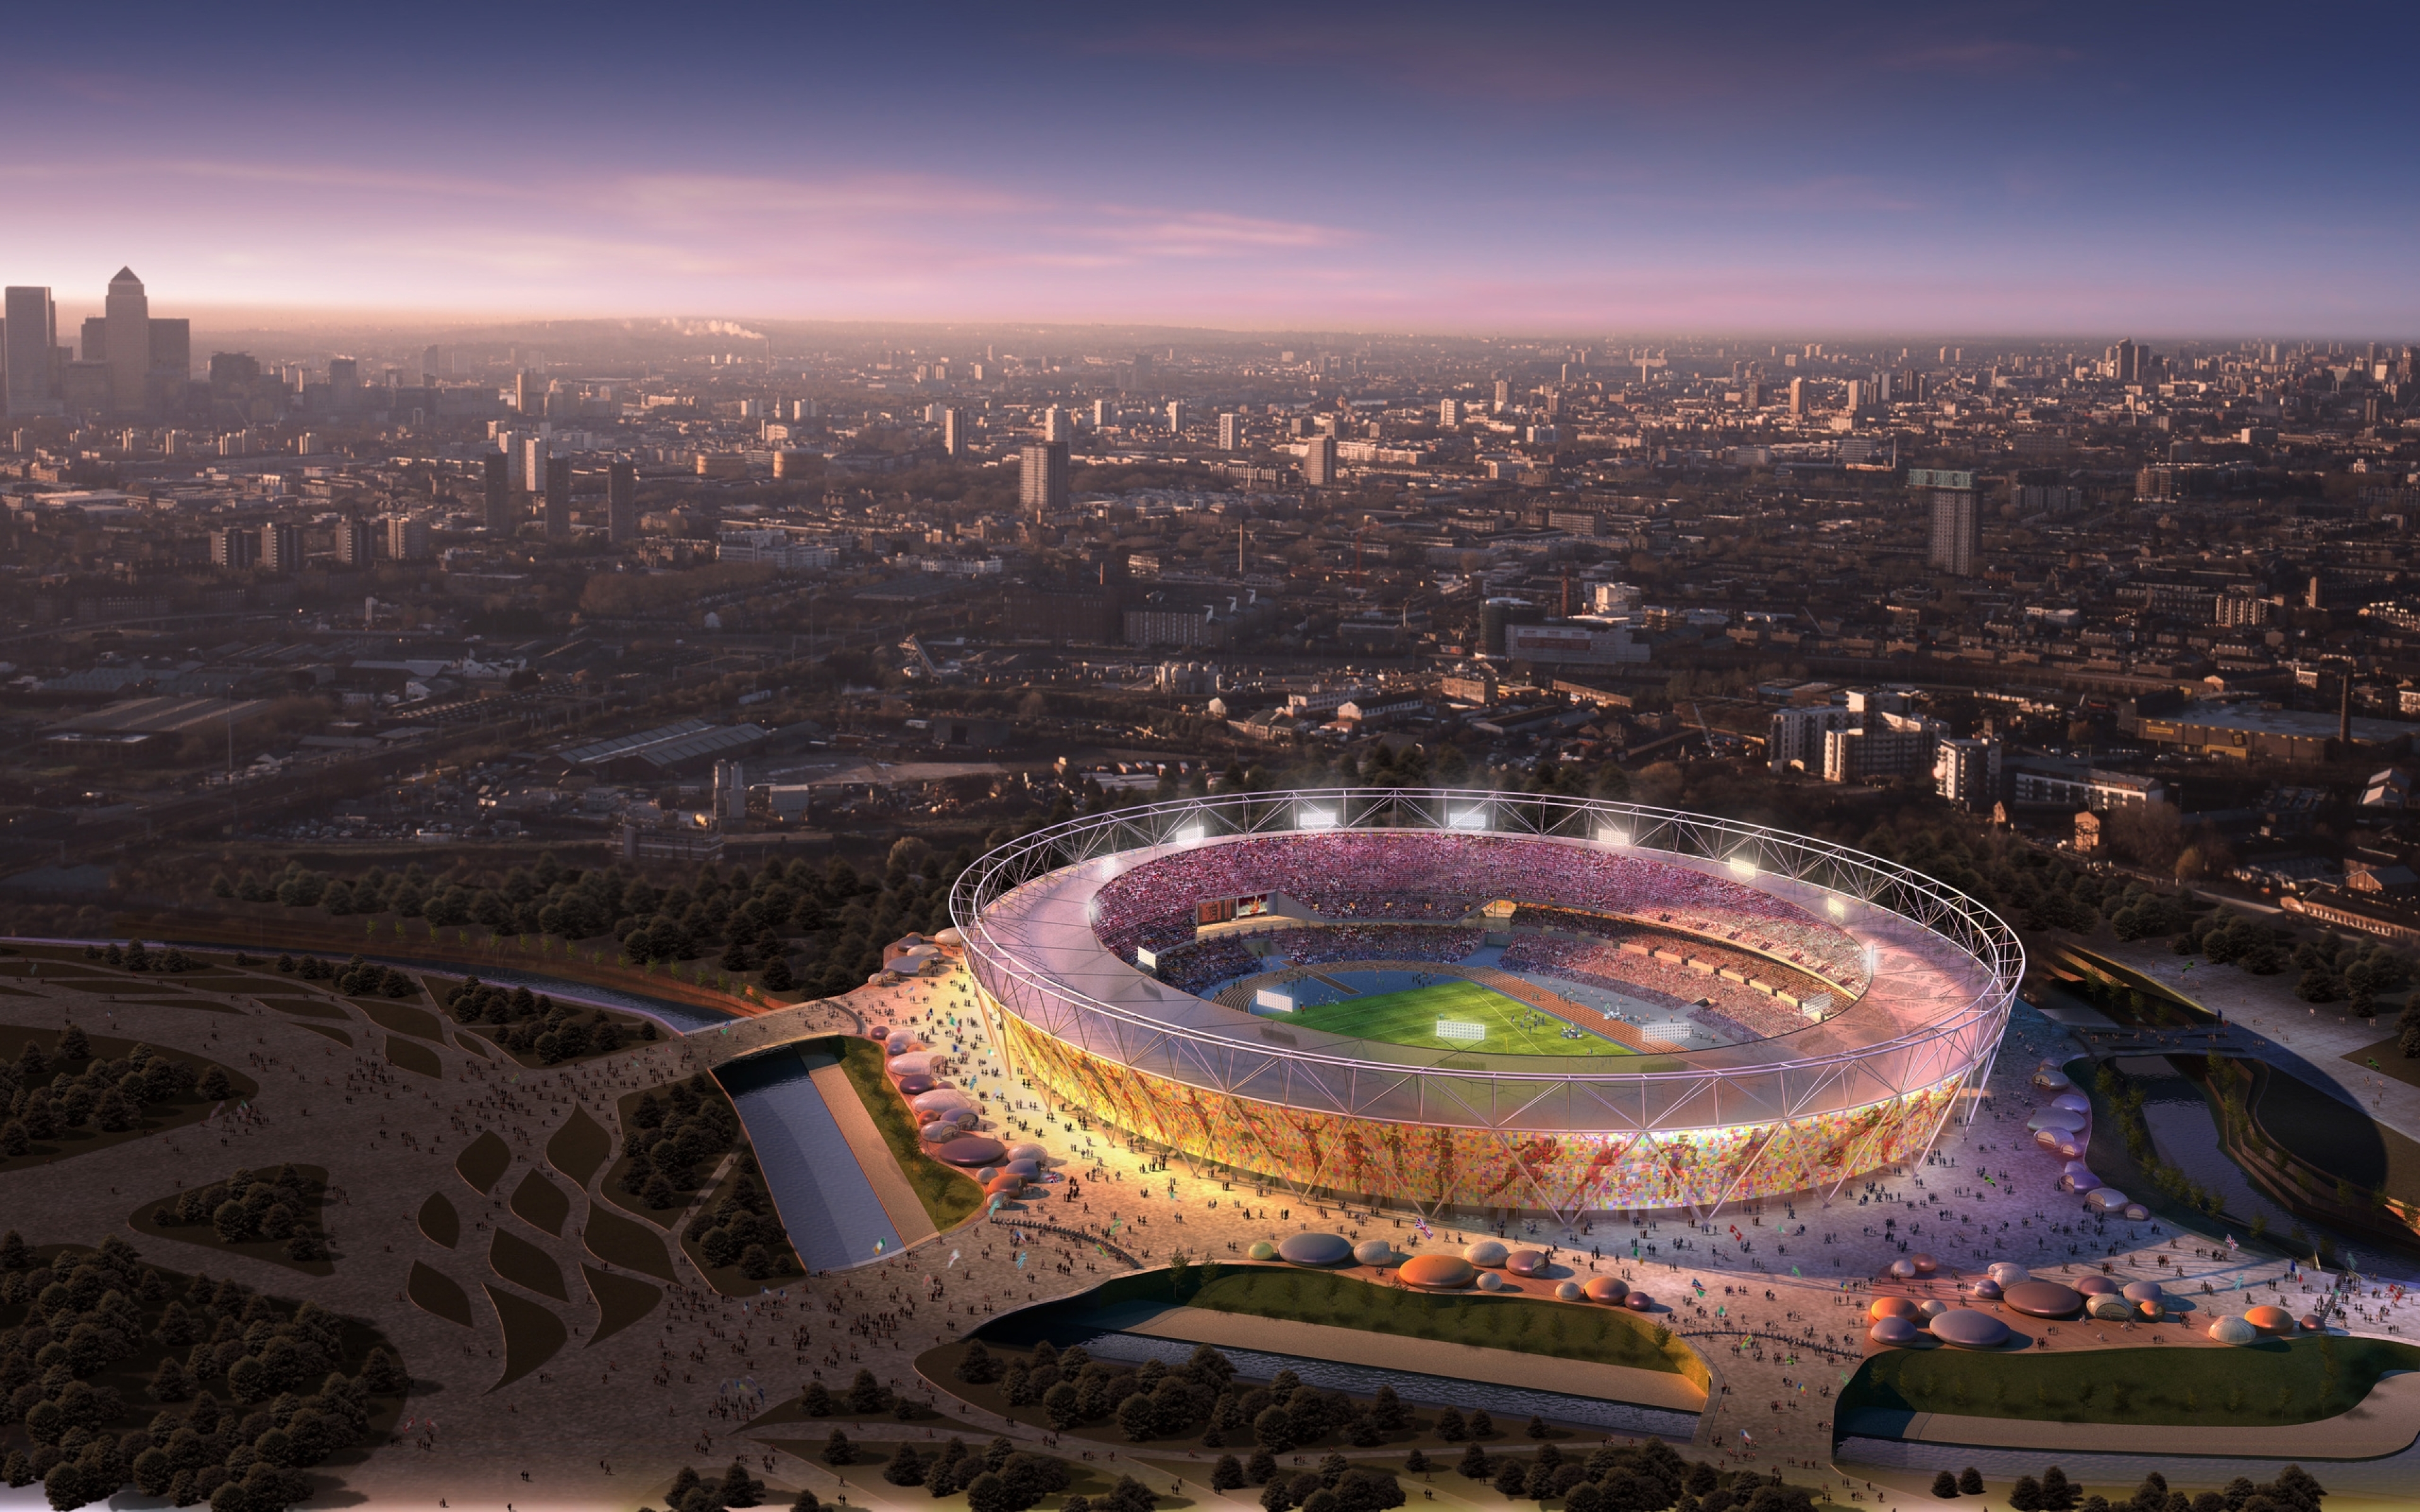 Граждан стадион. Олимпийский стадион (Лондон). Лондон 2012 стадион. Olympic Stadium фото в Лондоне. Лондон Стэдиум (Лондон) фото.